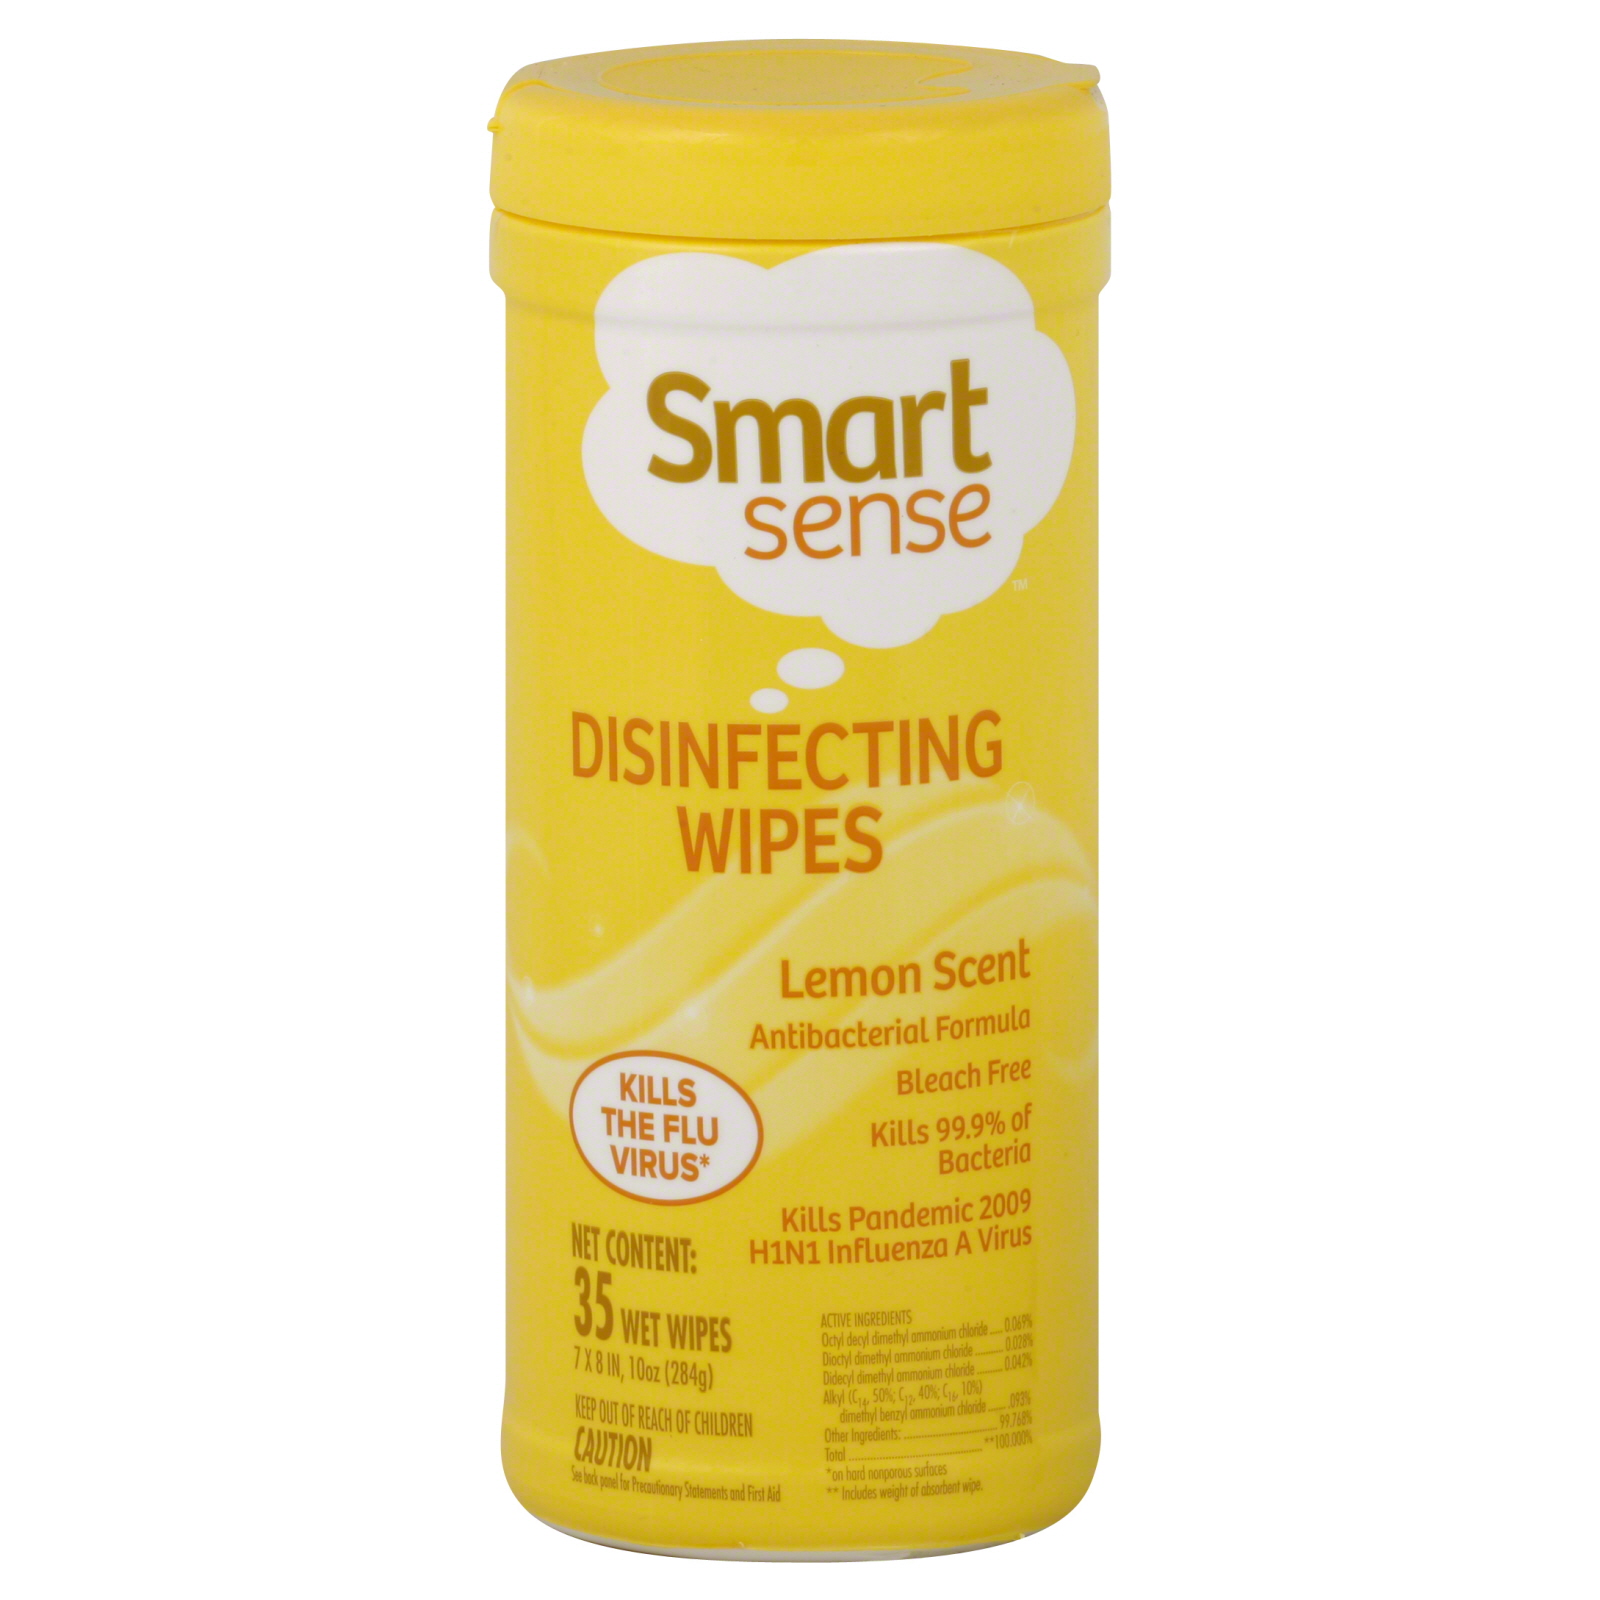 Smart Sense Disinfecting Wipes, Lemon Scent 35 wipes [10 oz (284 g)]